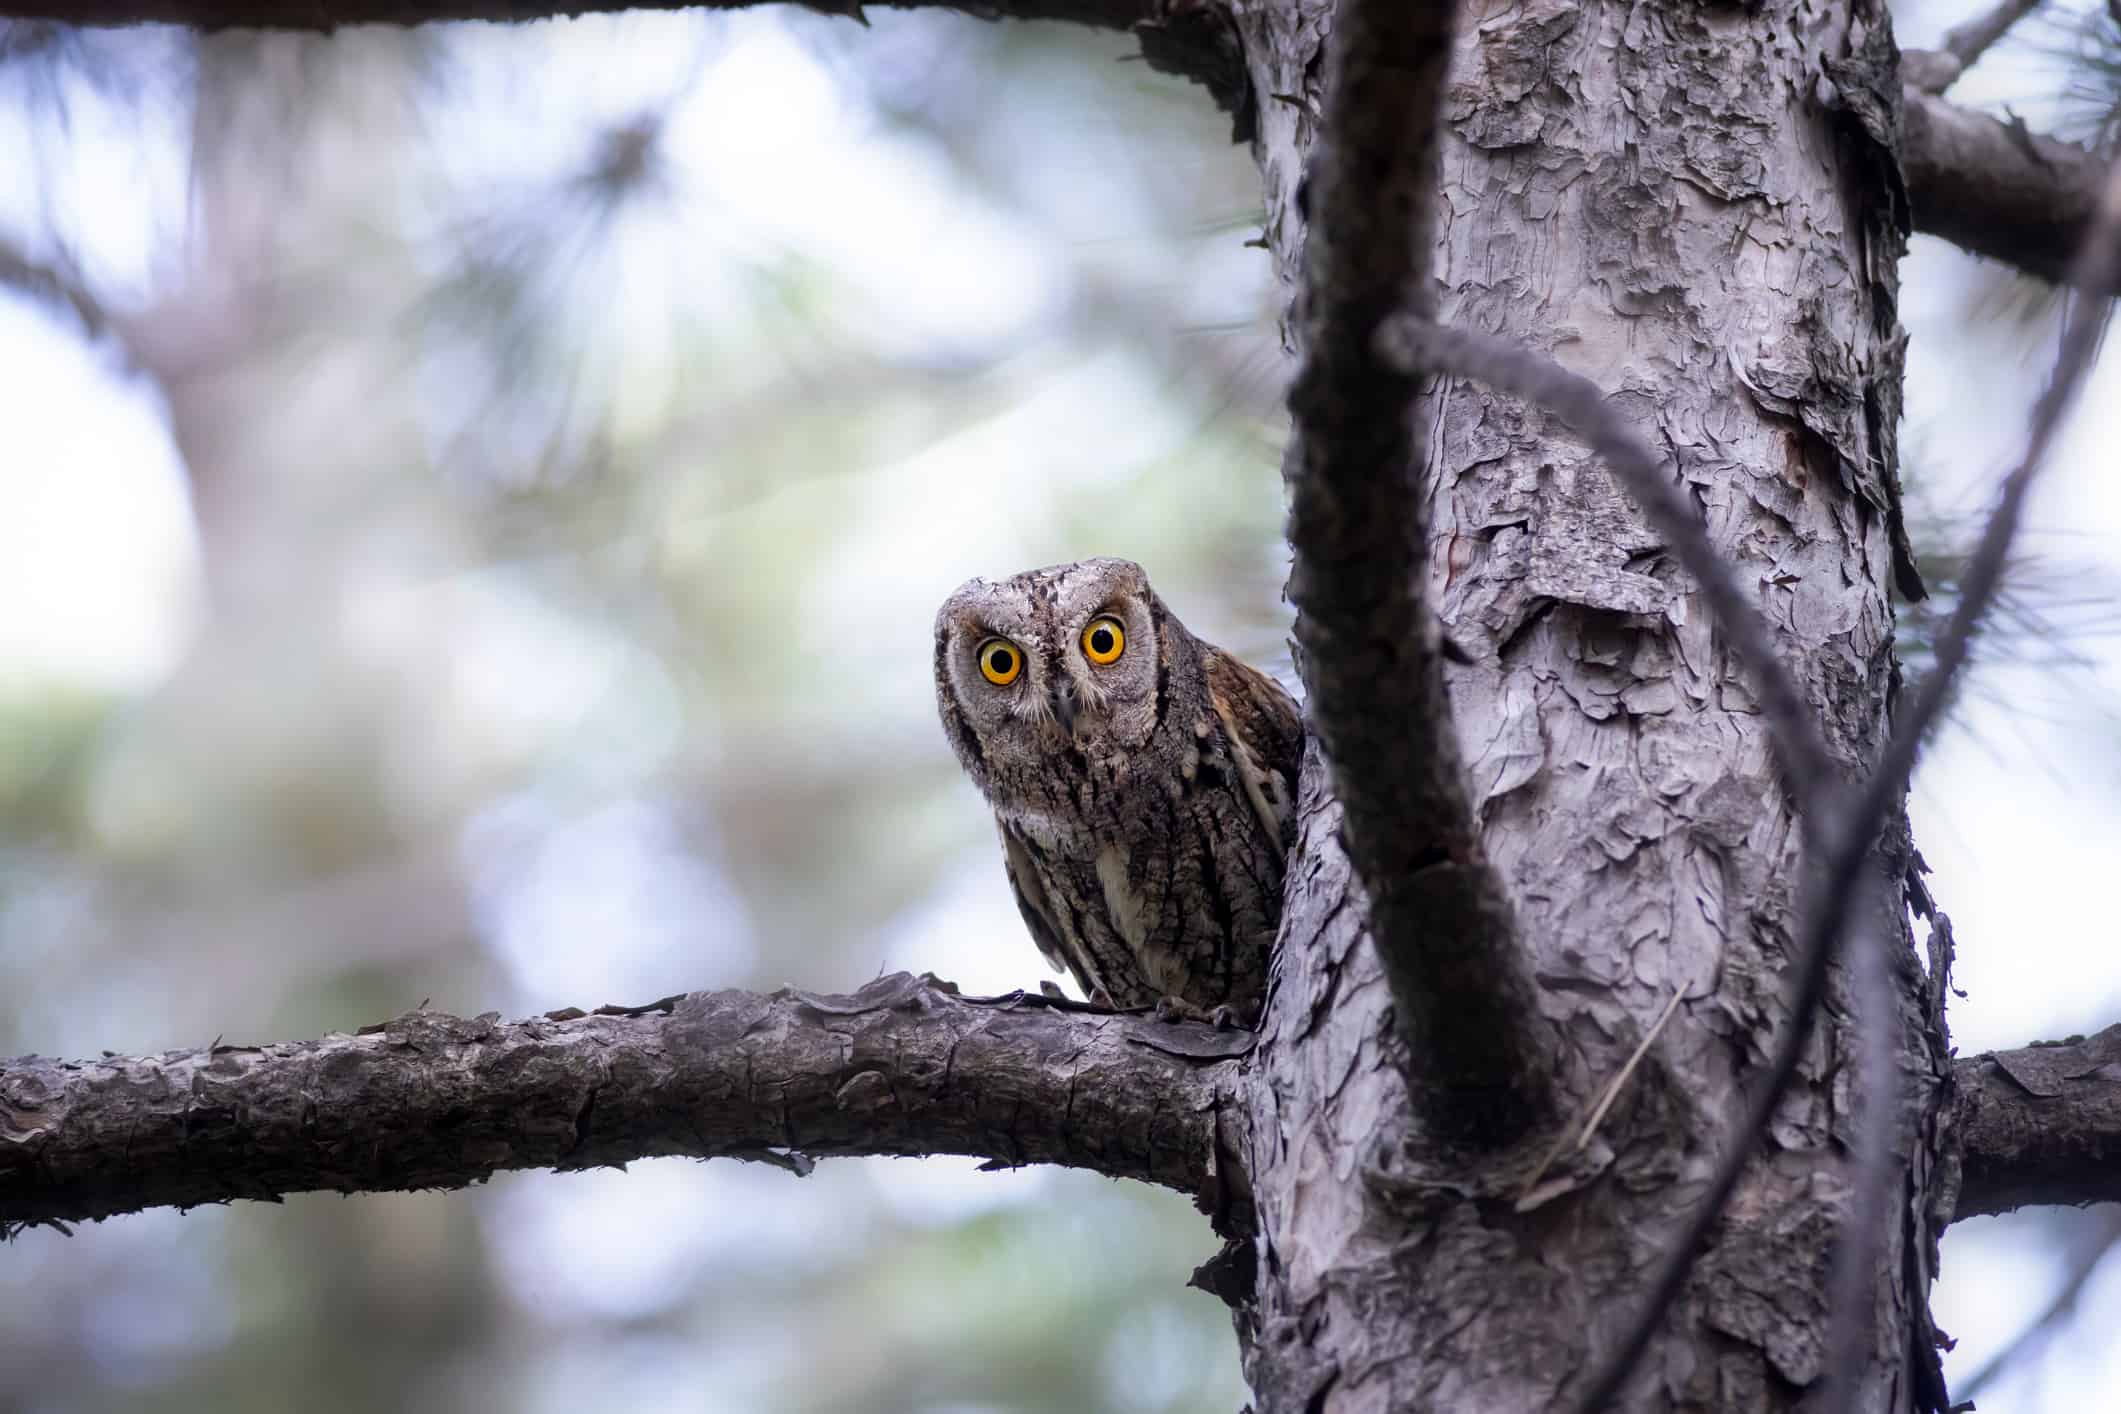 Owl. Eurasian Scops Owl. (Otus scops). Green nature background.